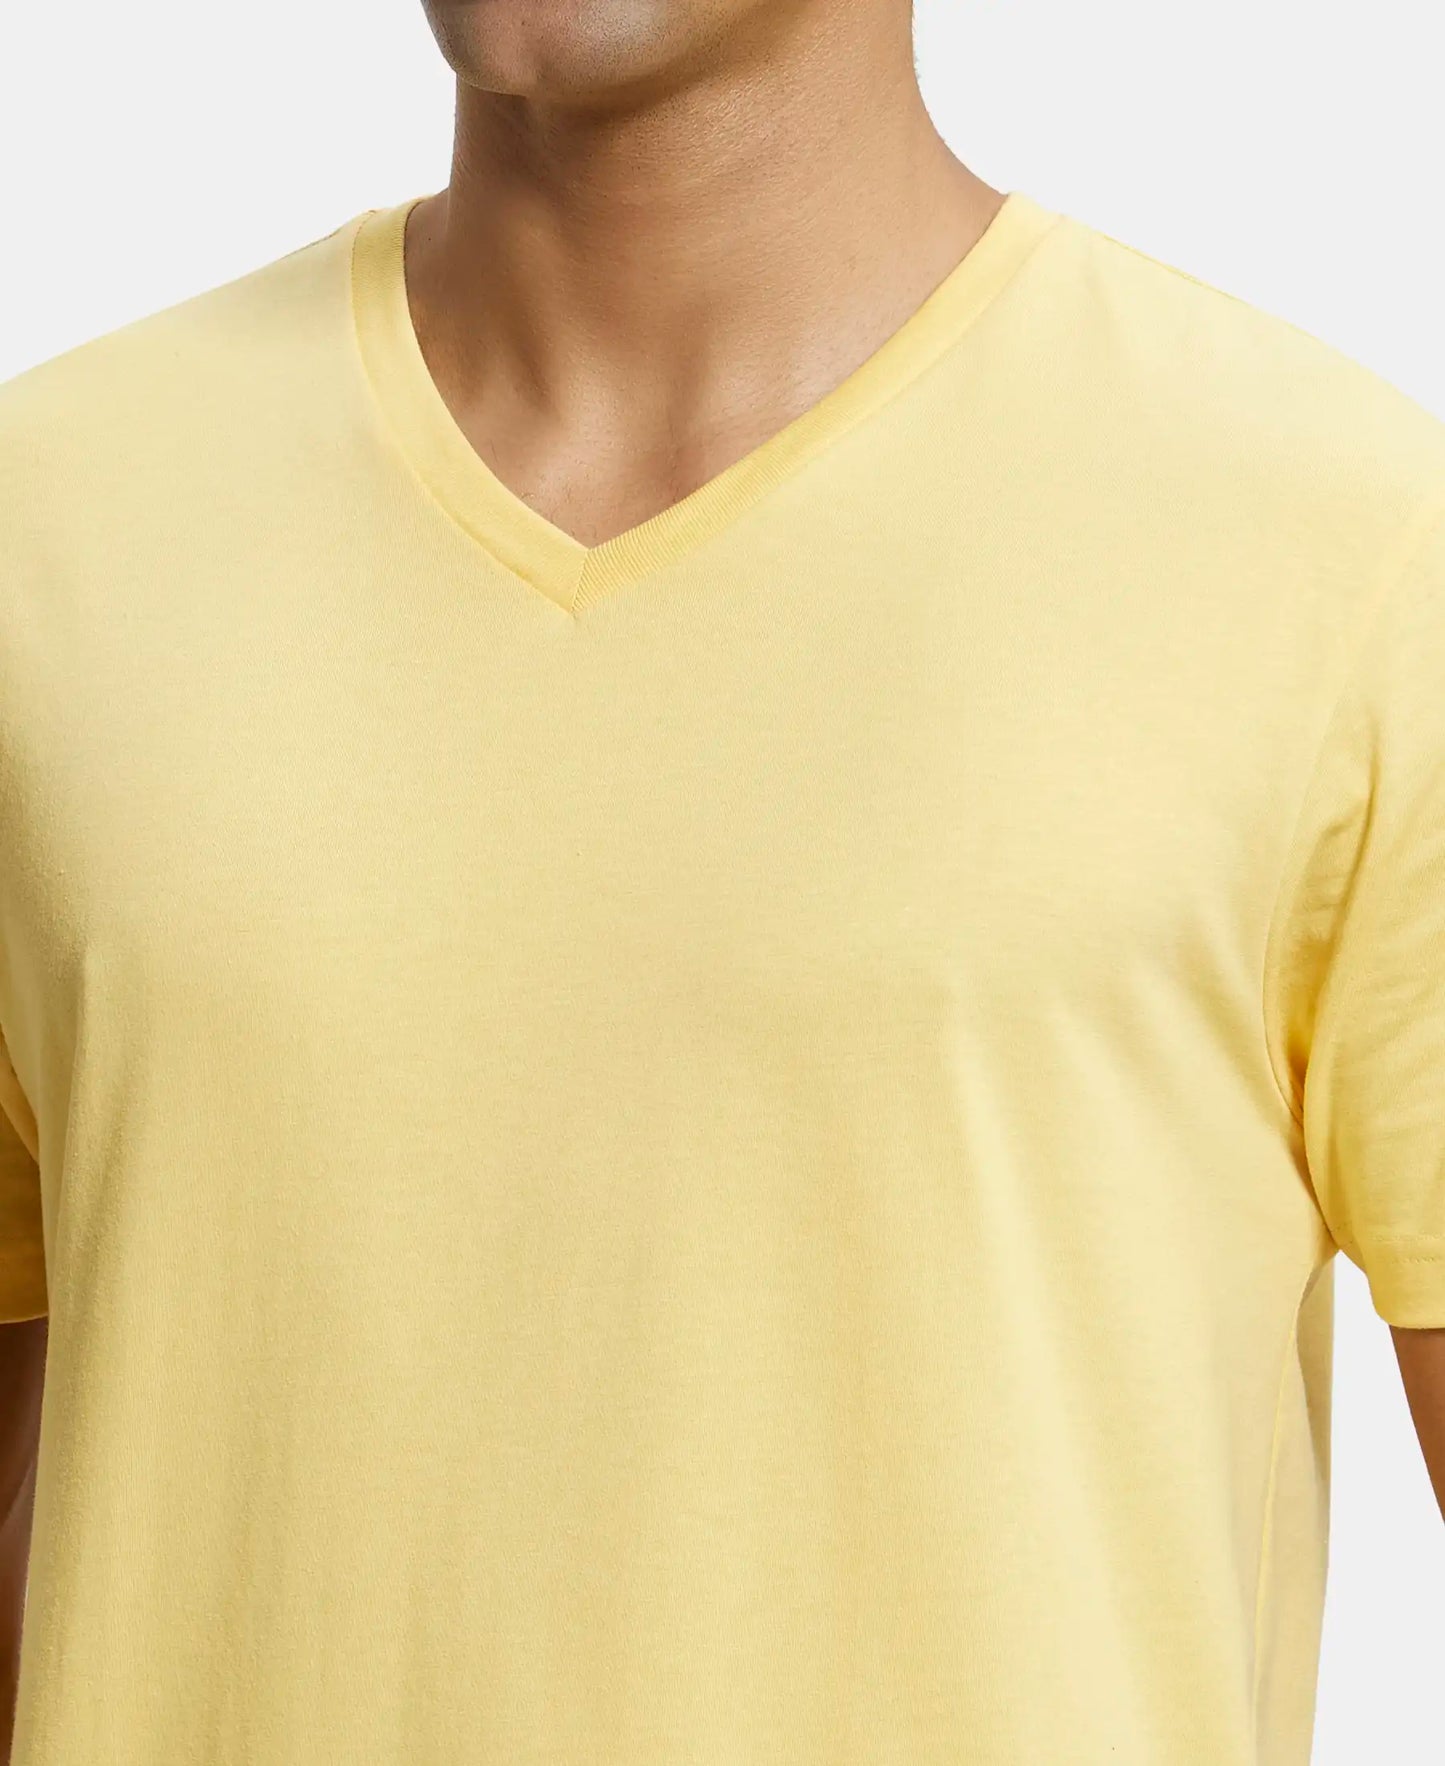 Super Combed Cotton Rich Solid V Neck Half Sleeve T-Shirt  - Corn Silk-6